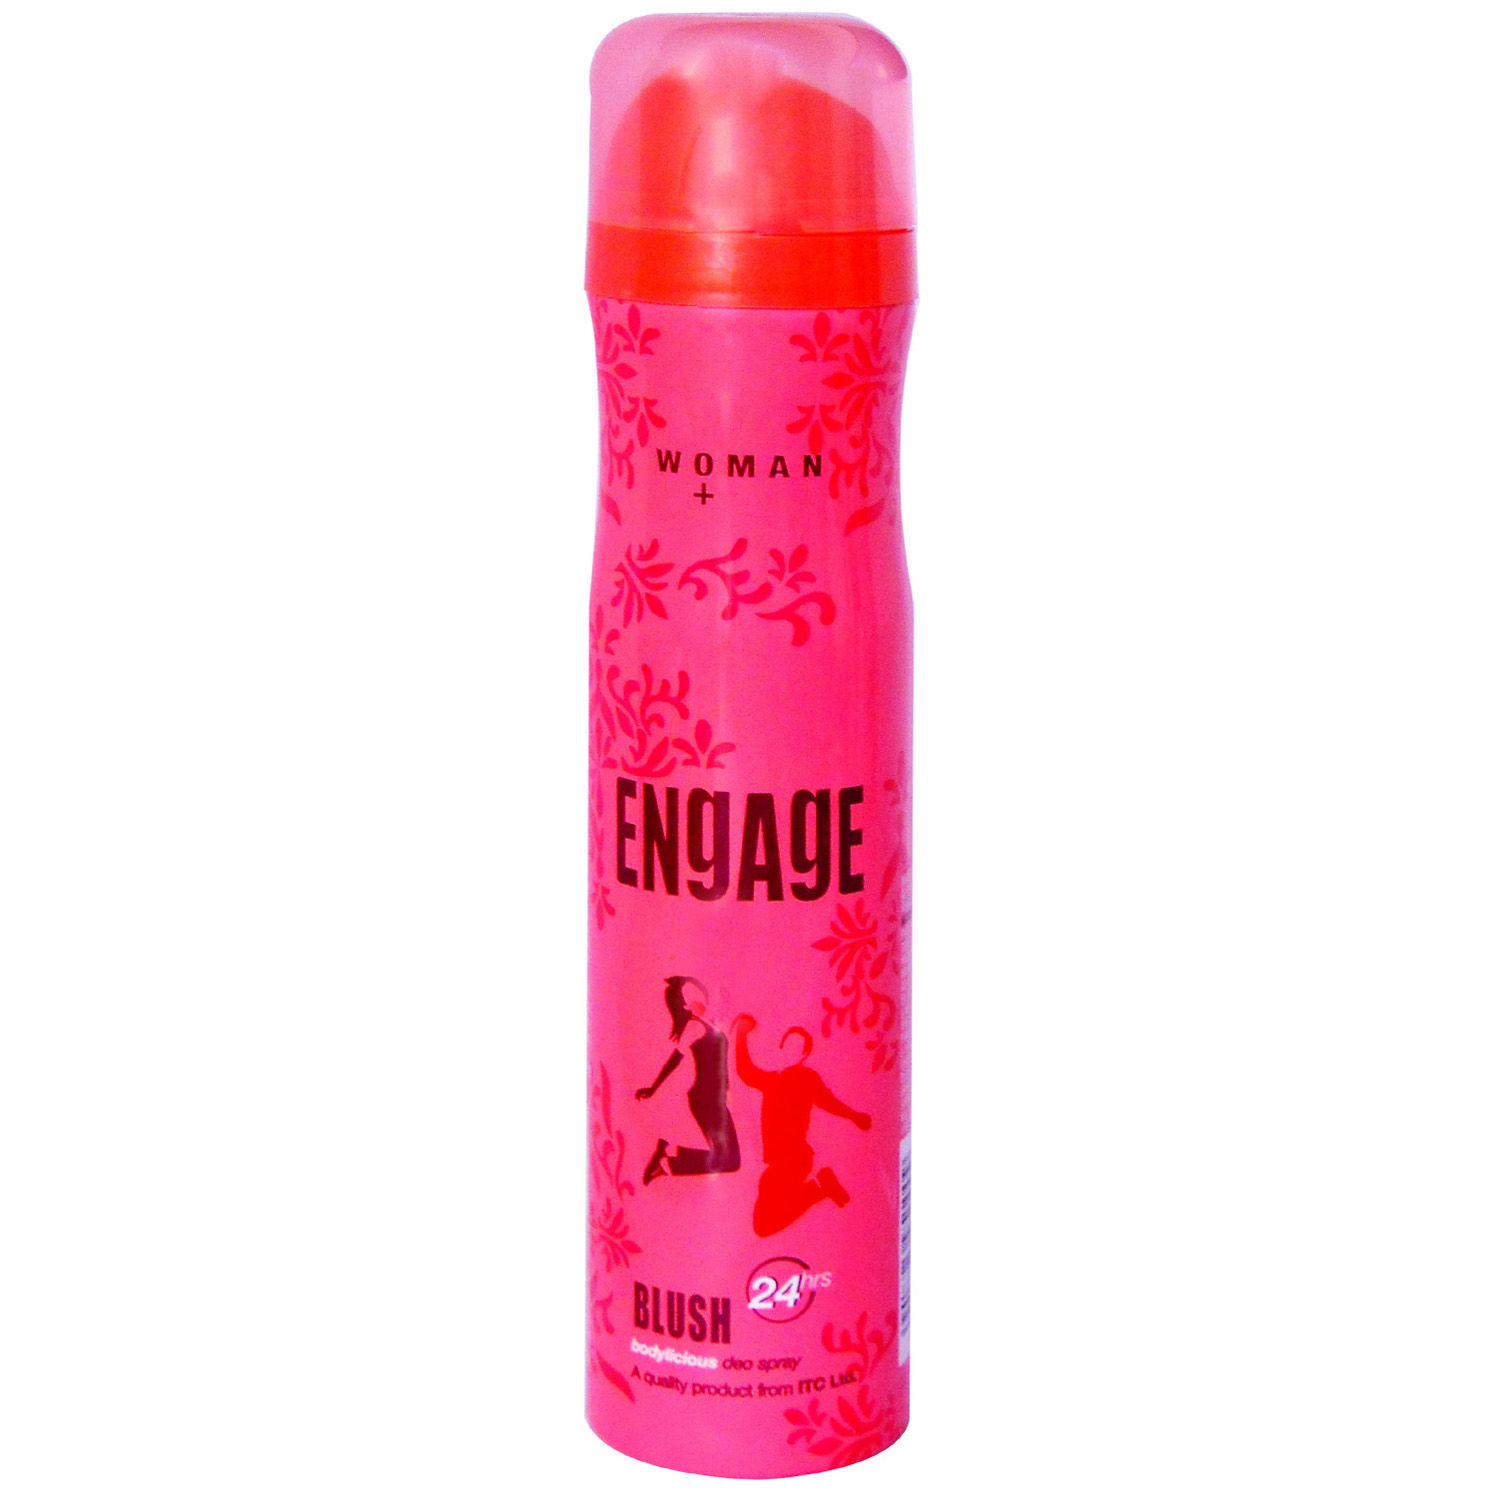 Engage Blush Deodorant Body Spray For Women, 165 ml, Pack of 1 